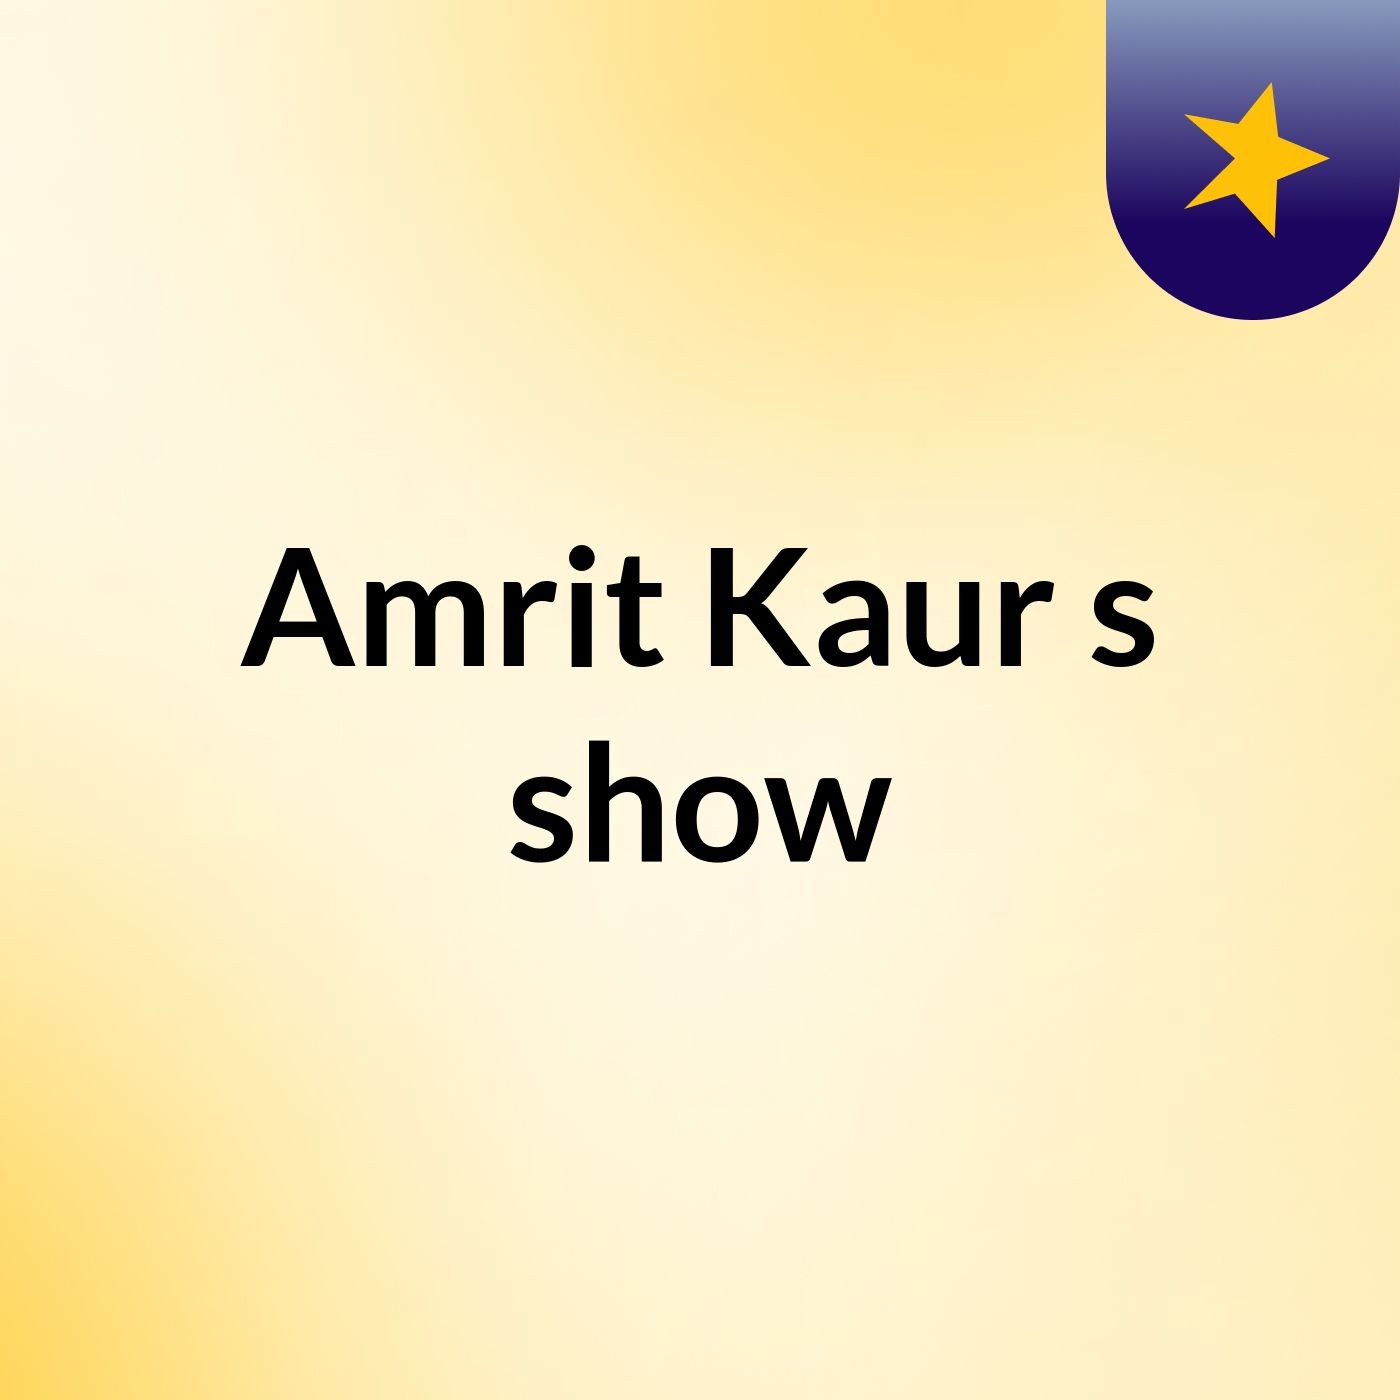 Amrit Kaur's show